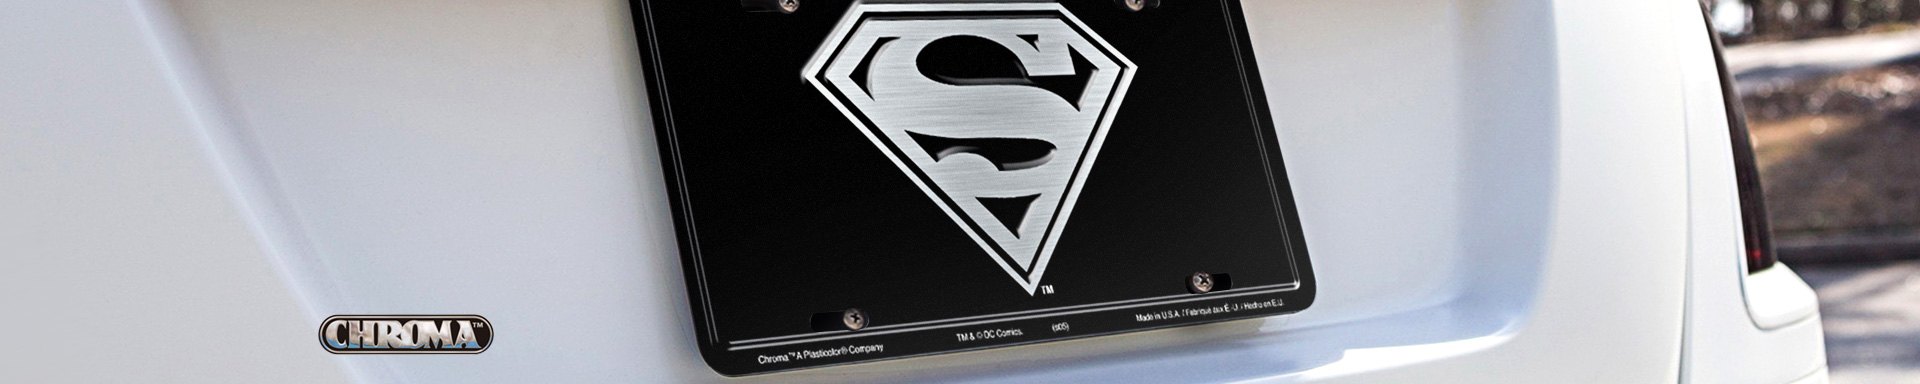 Chroma Graphics 3016 Classic Emblemz 3 piece Superman Decal